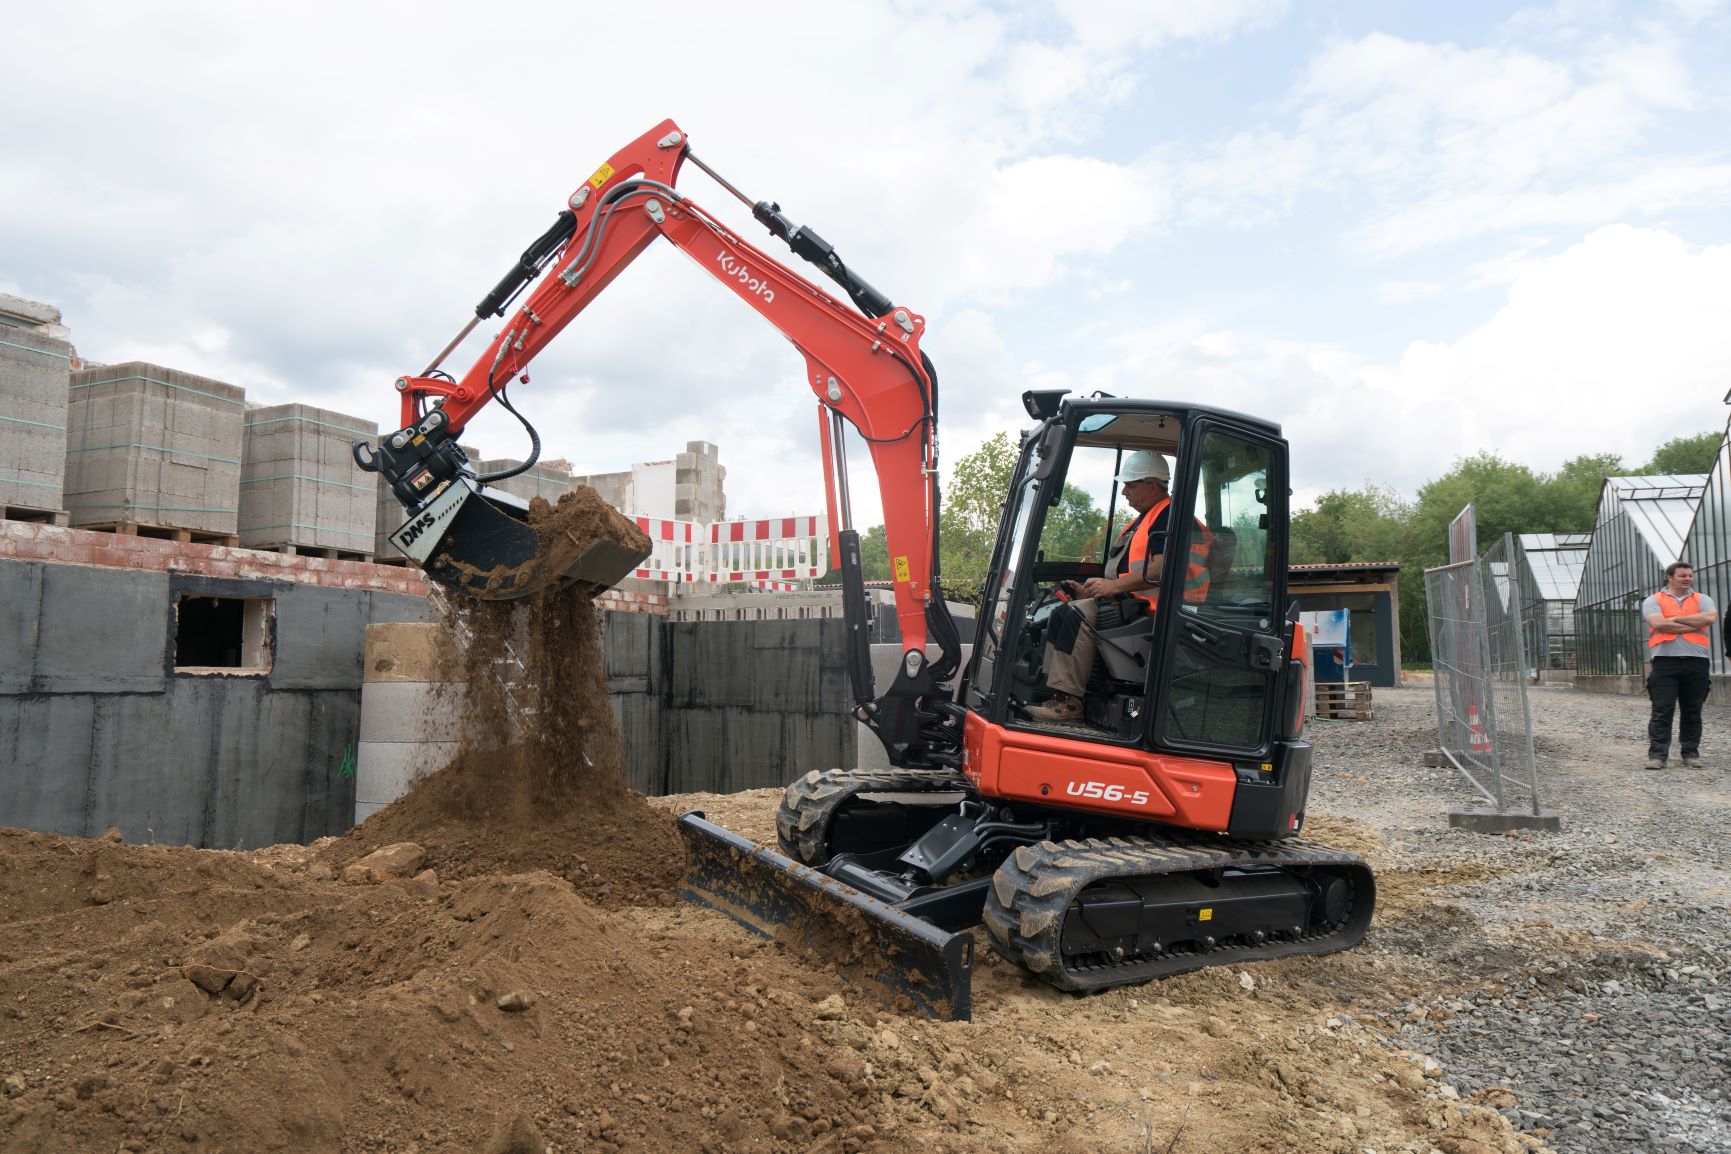 Kubota excavator working on site